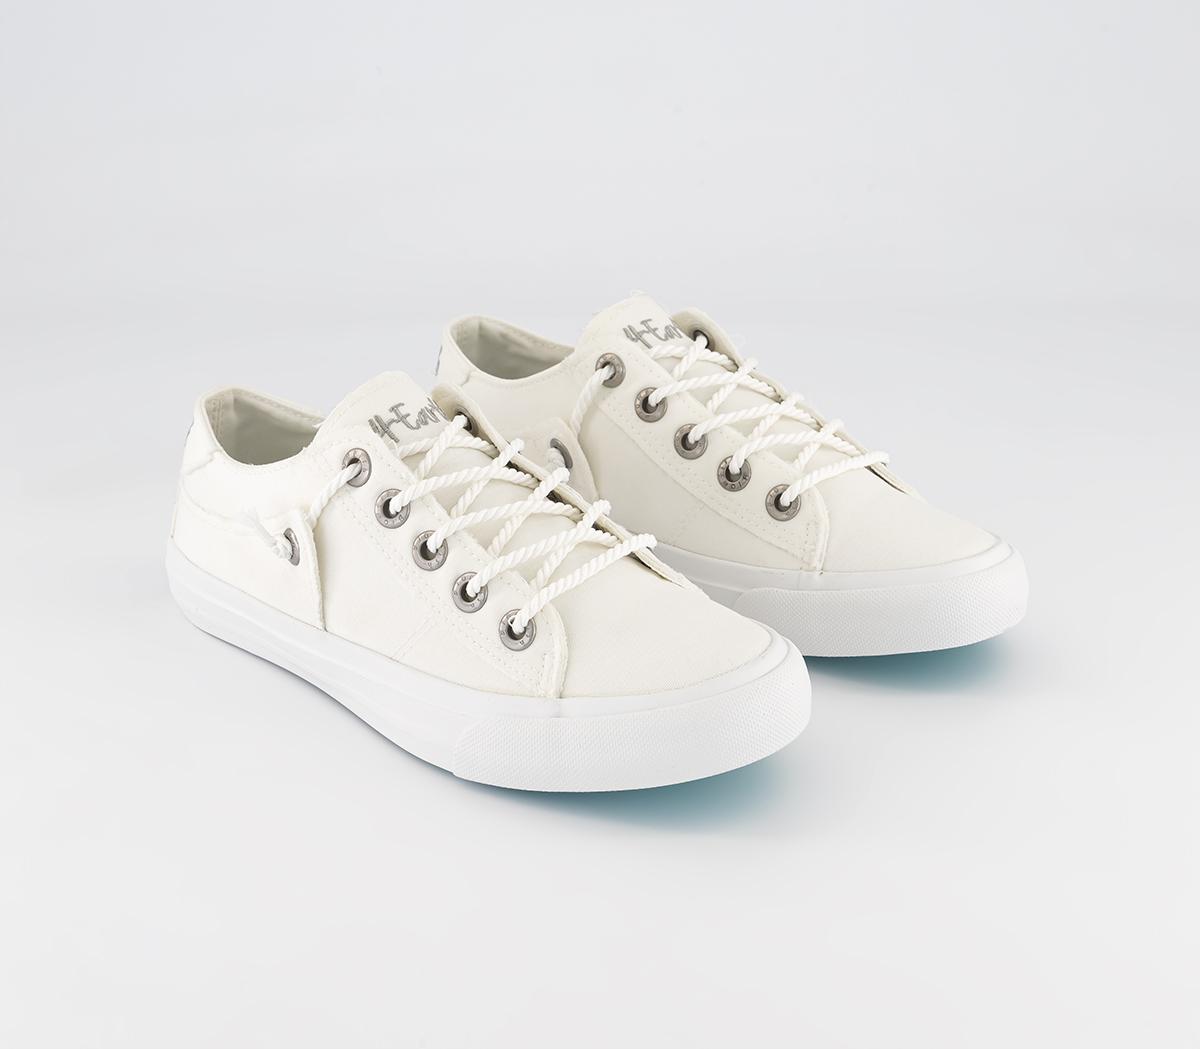 Blowfish Malibu Martina4earth Trainers White - Flat Shoes for Women